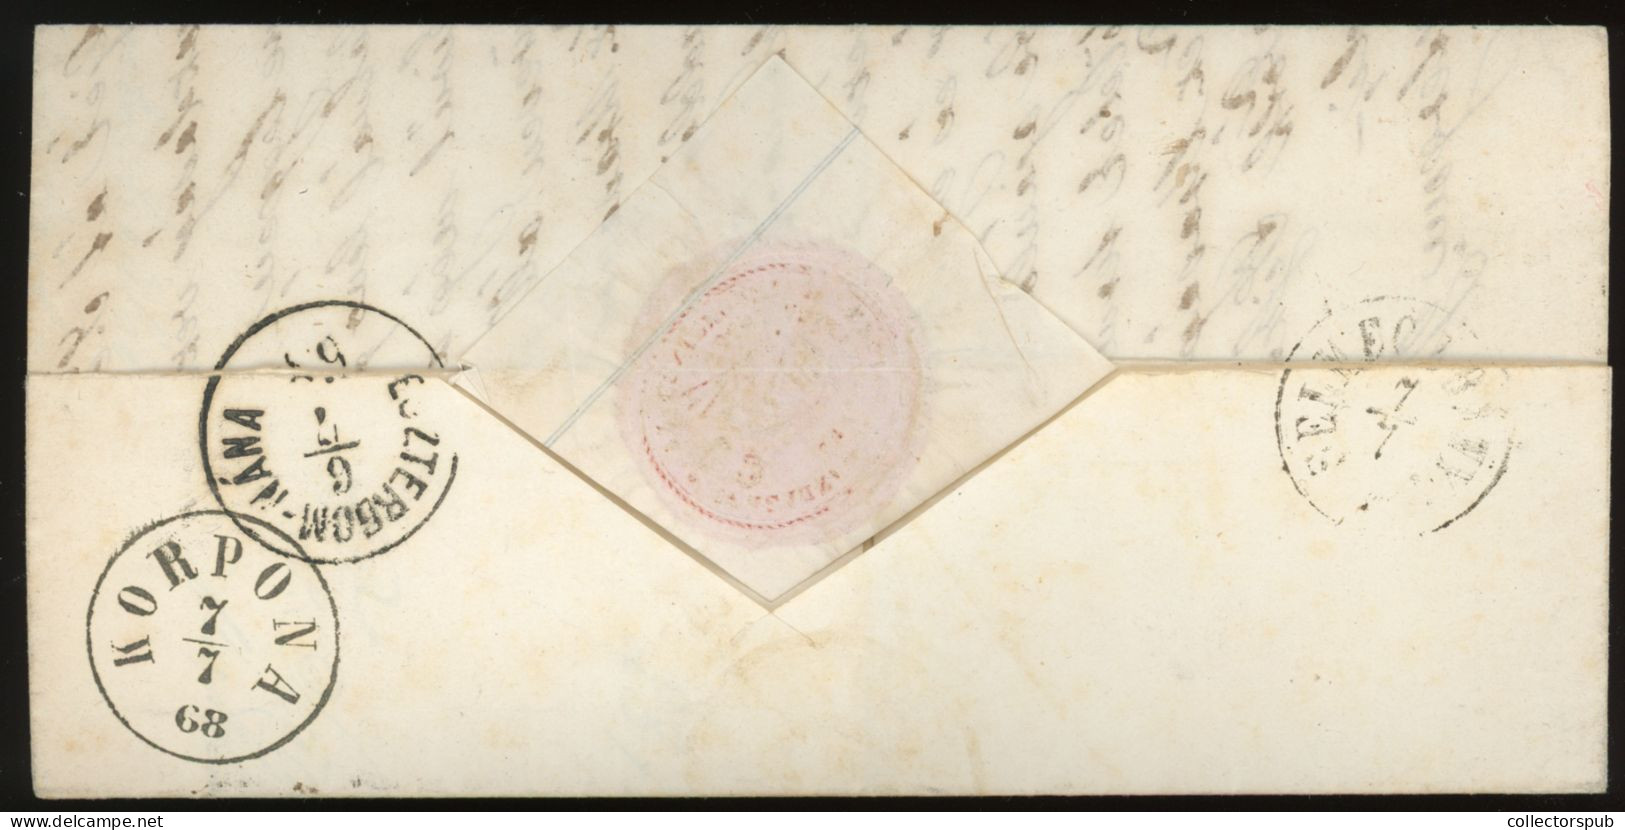 HUNGARY ESZTERGOM 1868. Nice Letter To Selmecbánya - Storia Postale